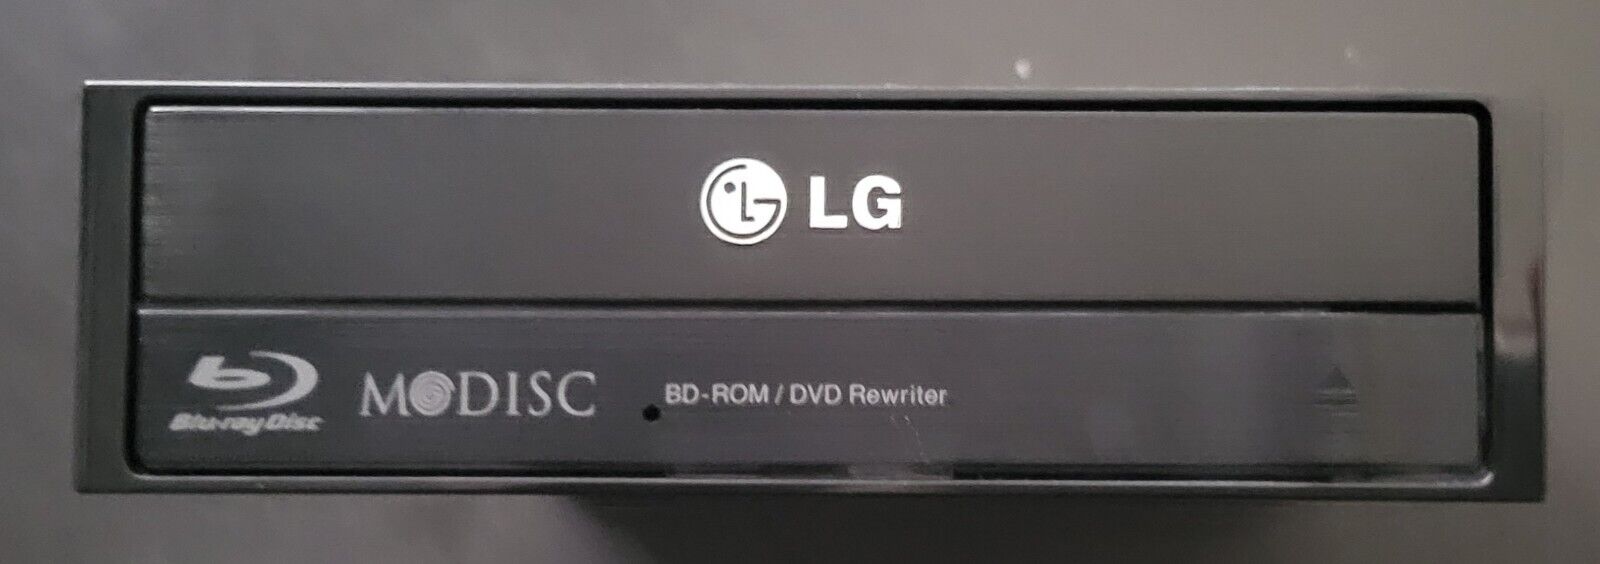 LG BD-ROM/DVD REWRITER Model UH12NS30